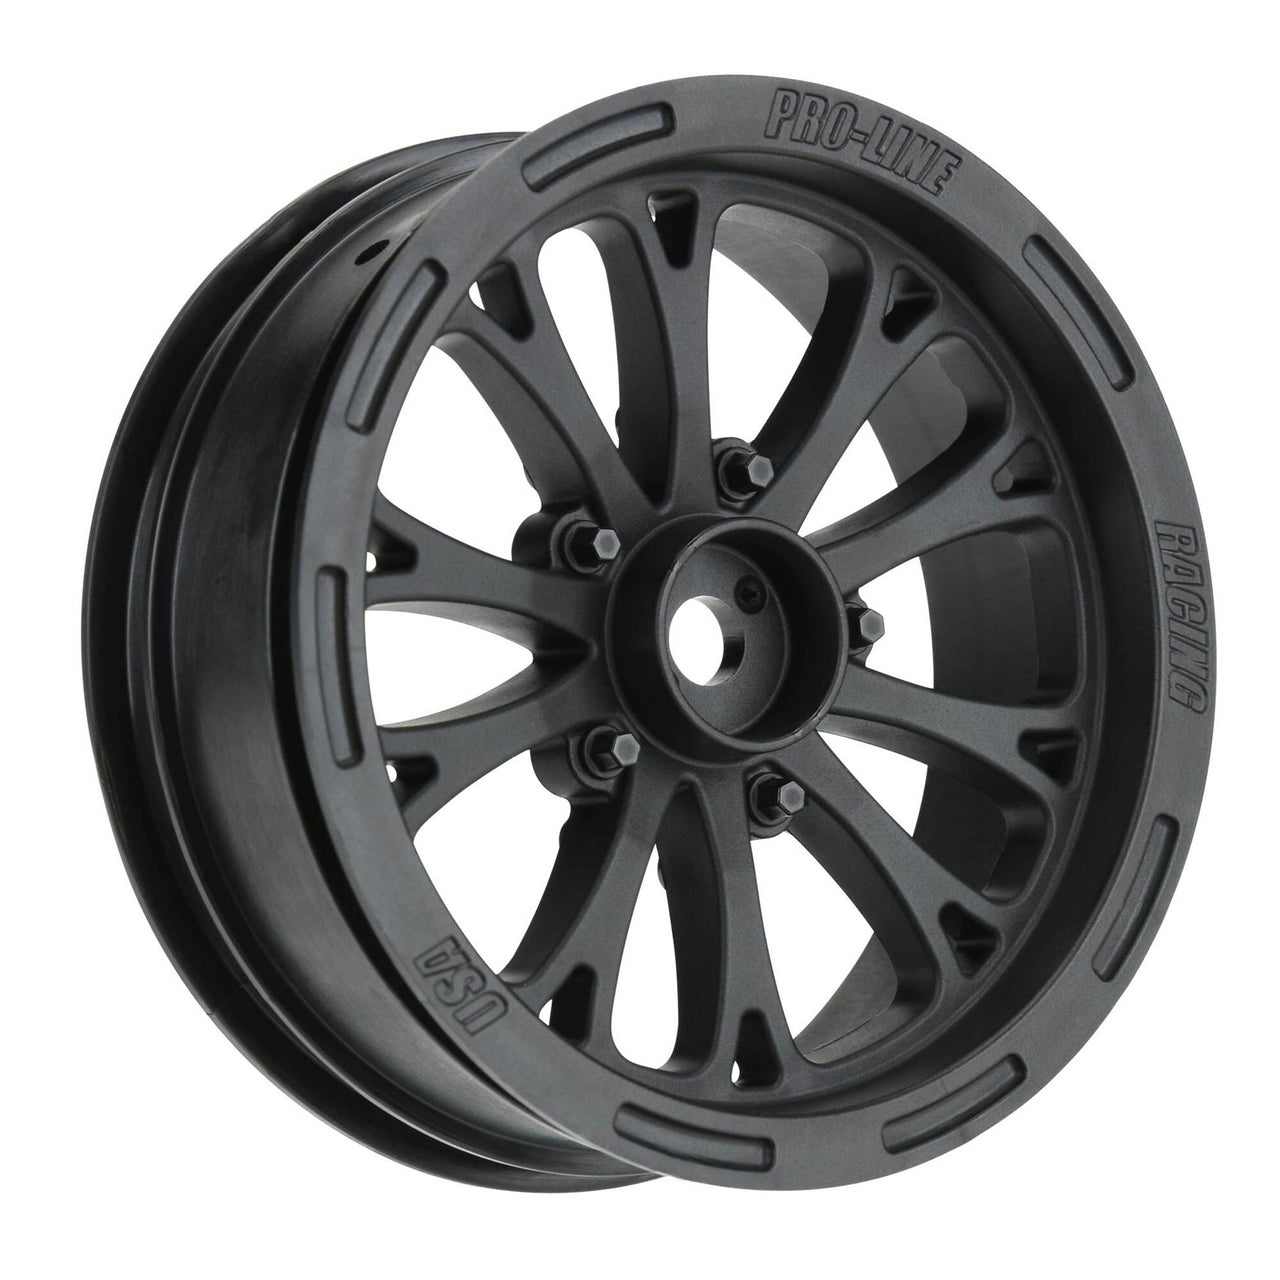 PRO277503 1/10 Pomona Drag Spec Front 2.2" 12mm Drag Wheels (2) Black